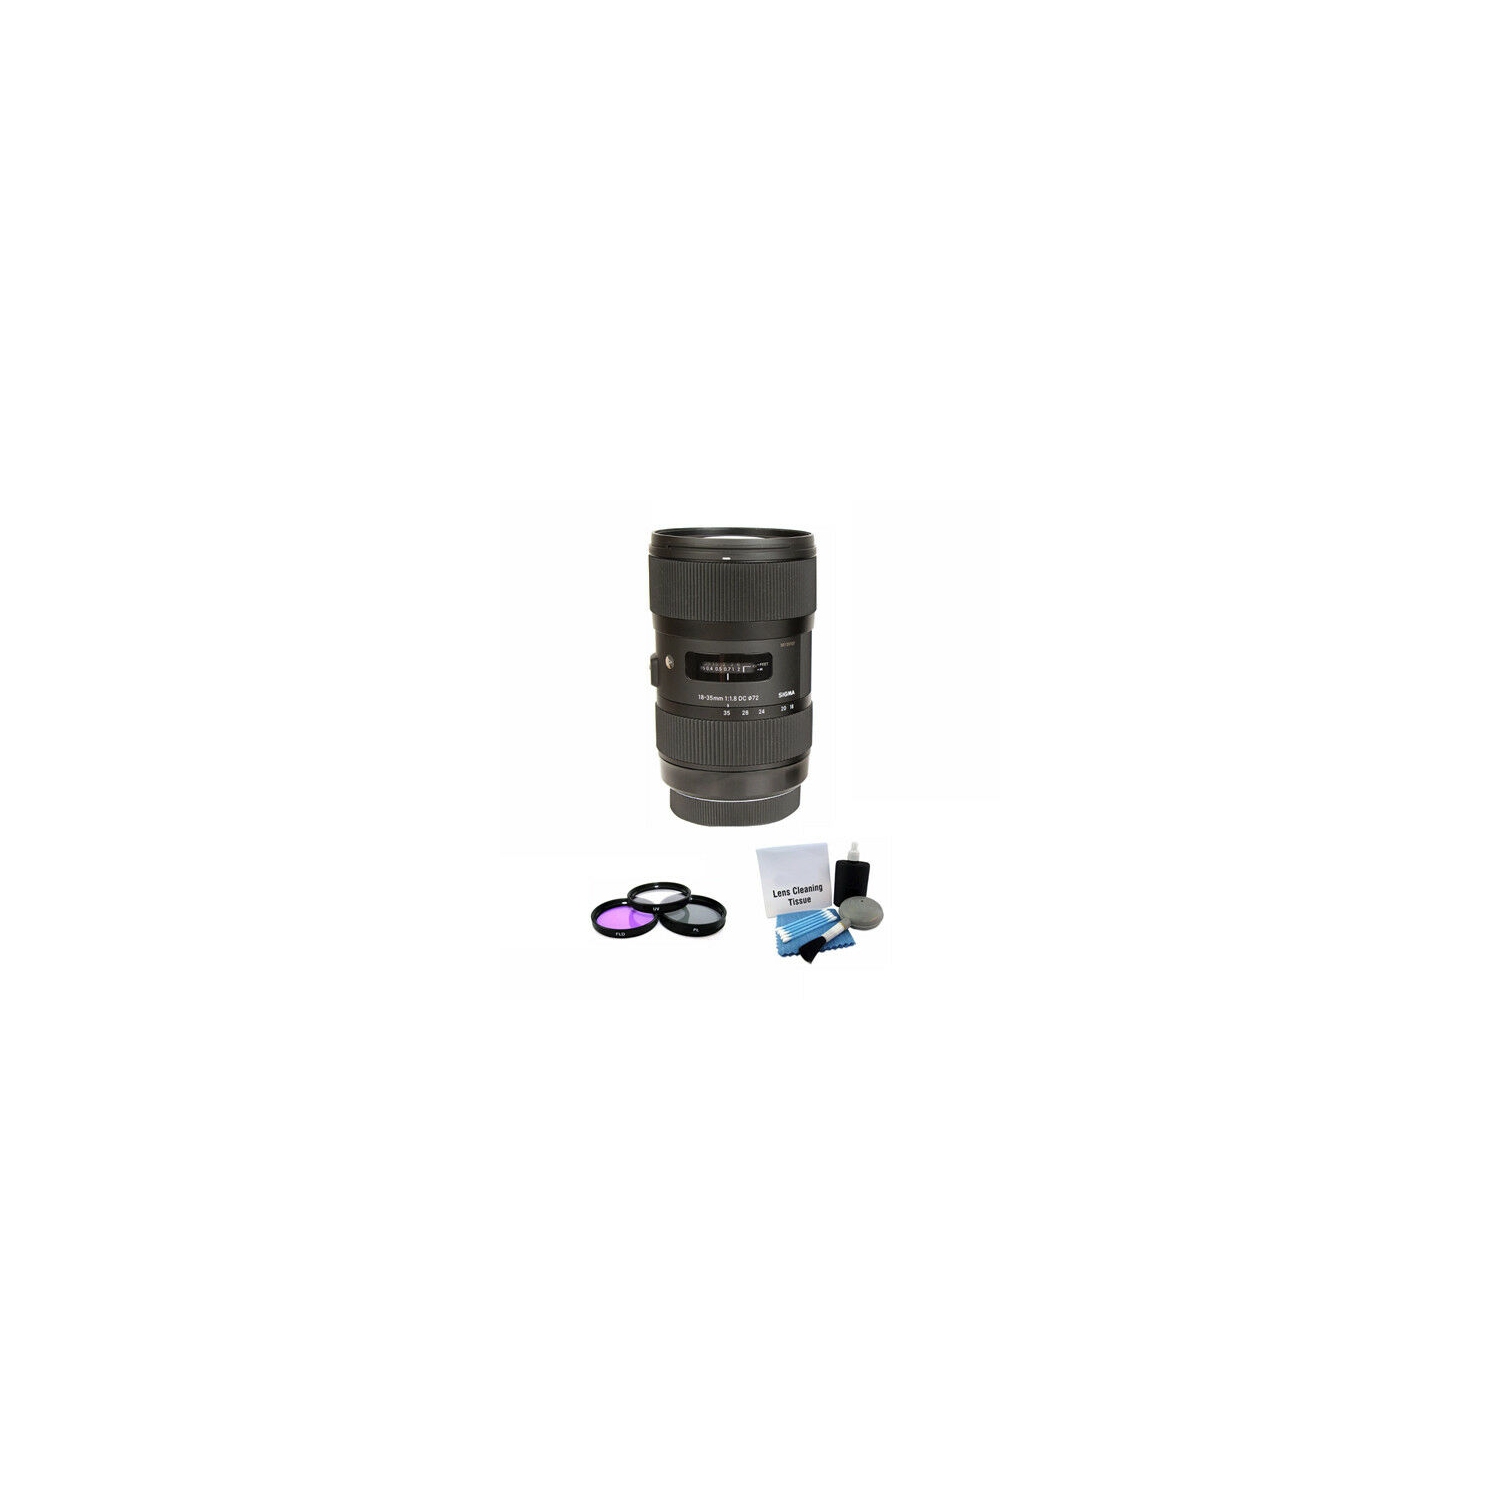 Sigma 18-35mm f/1.8 DC HSM Lens for Nikon + UV Kit & Cleaning Kit Bundle